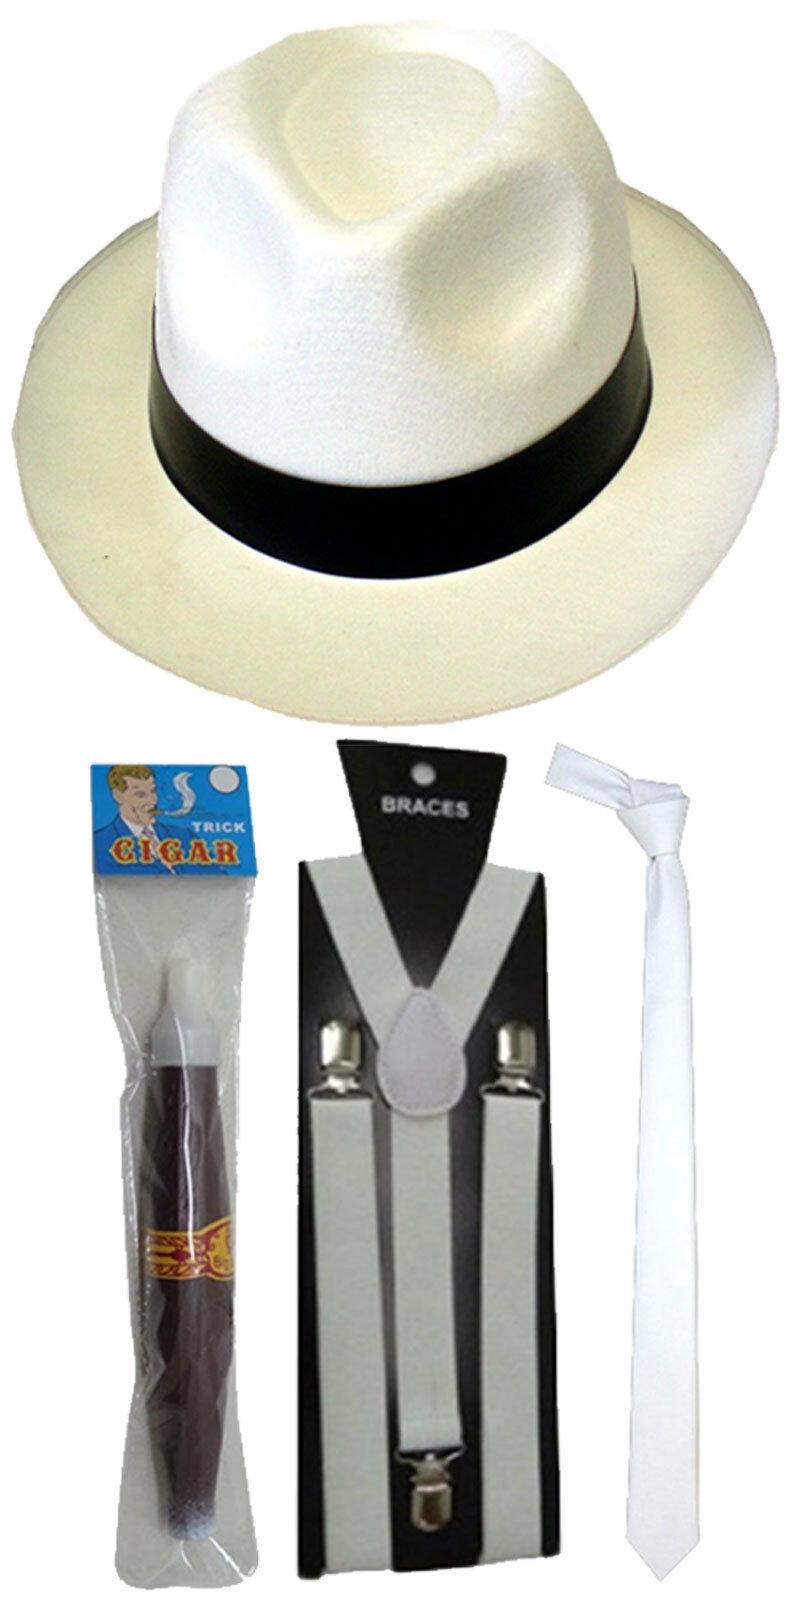 GANGSTER BRACES TIE HAT & CIGAR 1920s COSTUME ROARING 20s PIMP FANCY DRESS - Labreeze